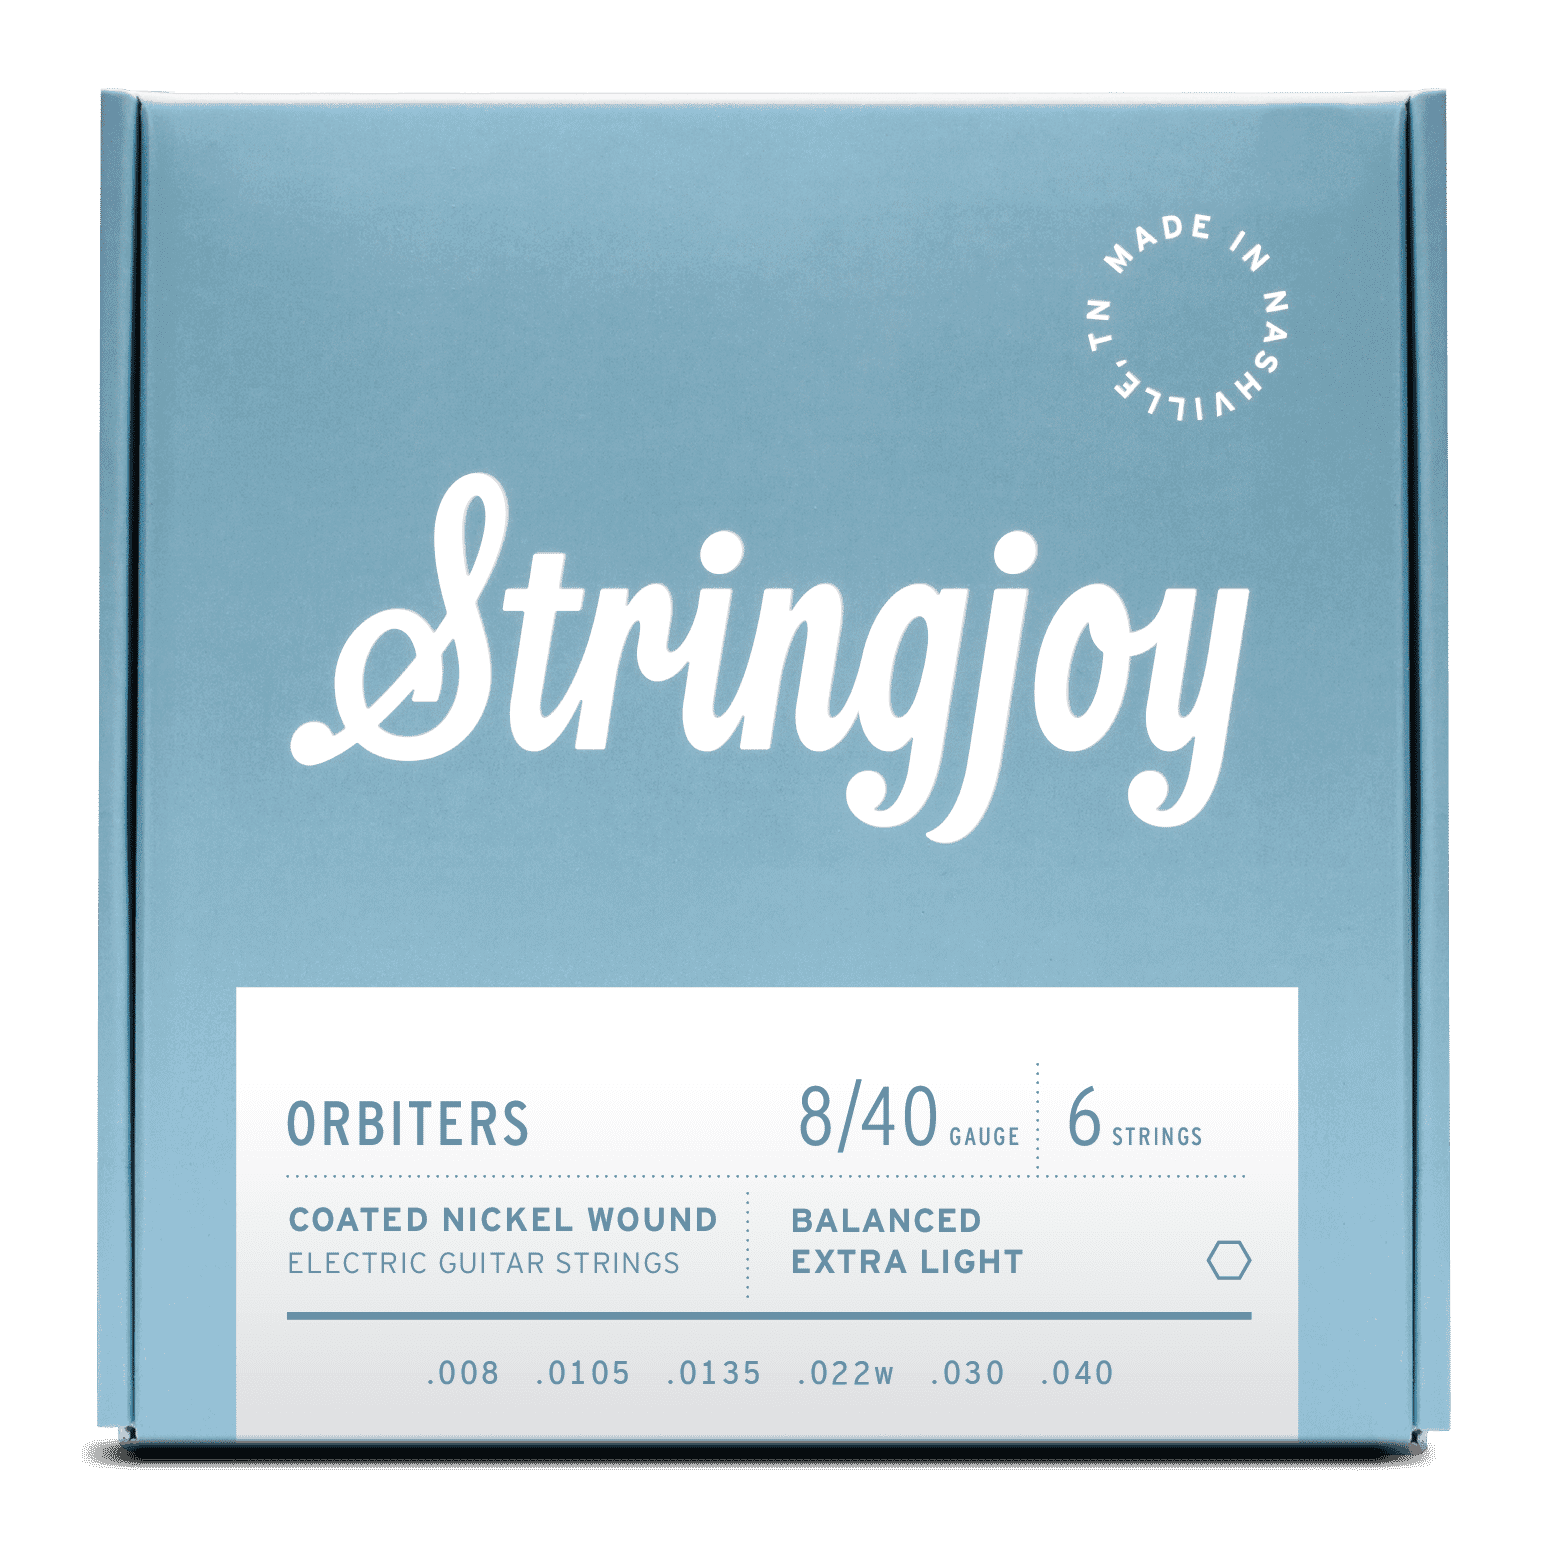 Stringjoy Orbiters | Balanced Extra Light Gauge (8-40) Coated Nickel Wound Electric Guitar Strings